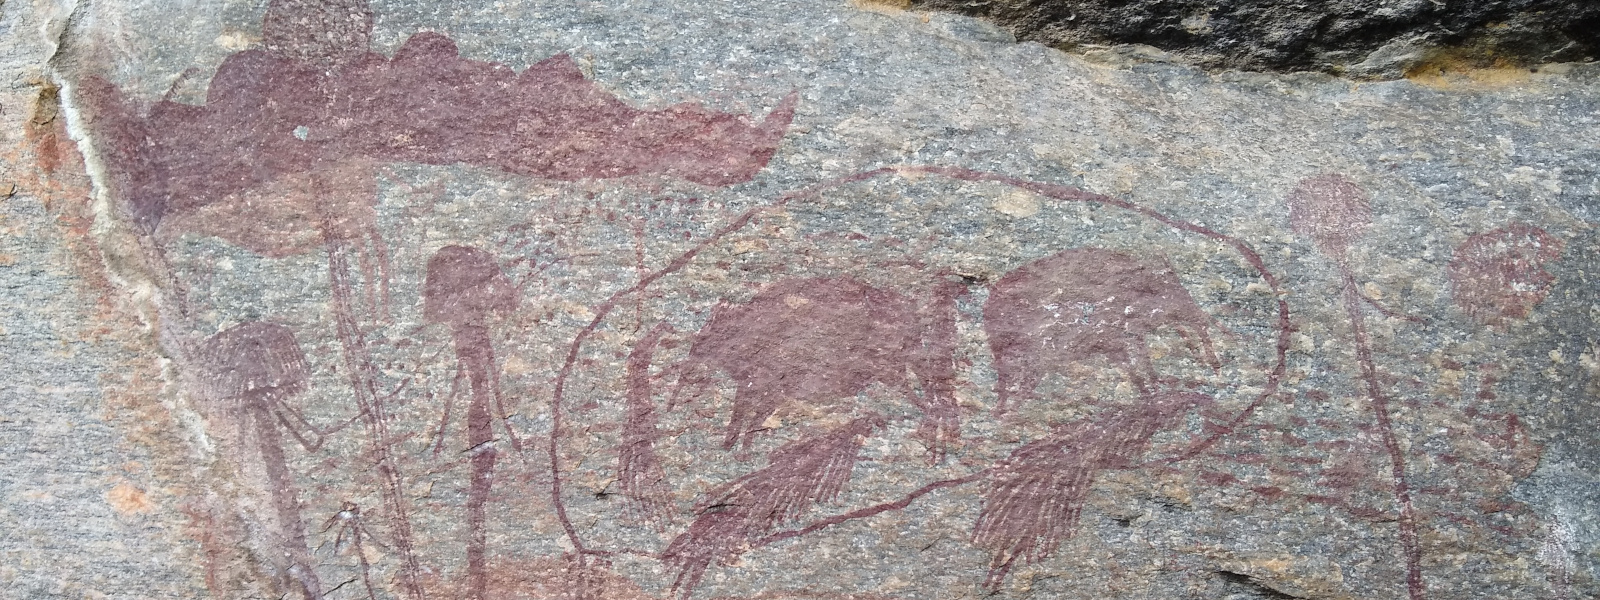 The rock paintings of Kondoa Irangi